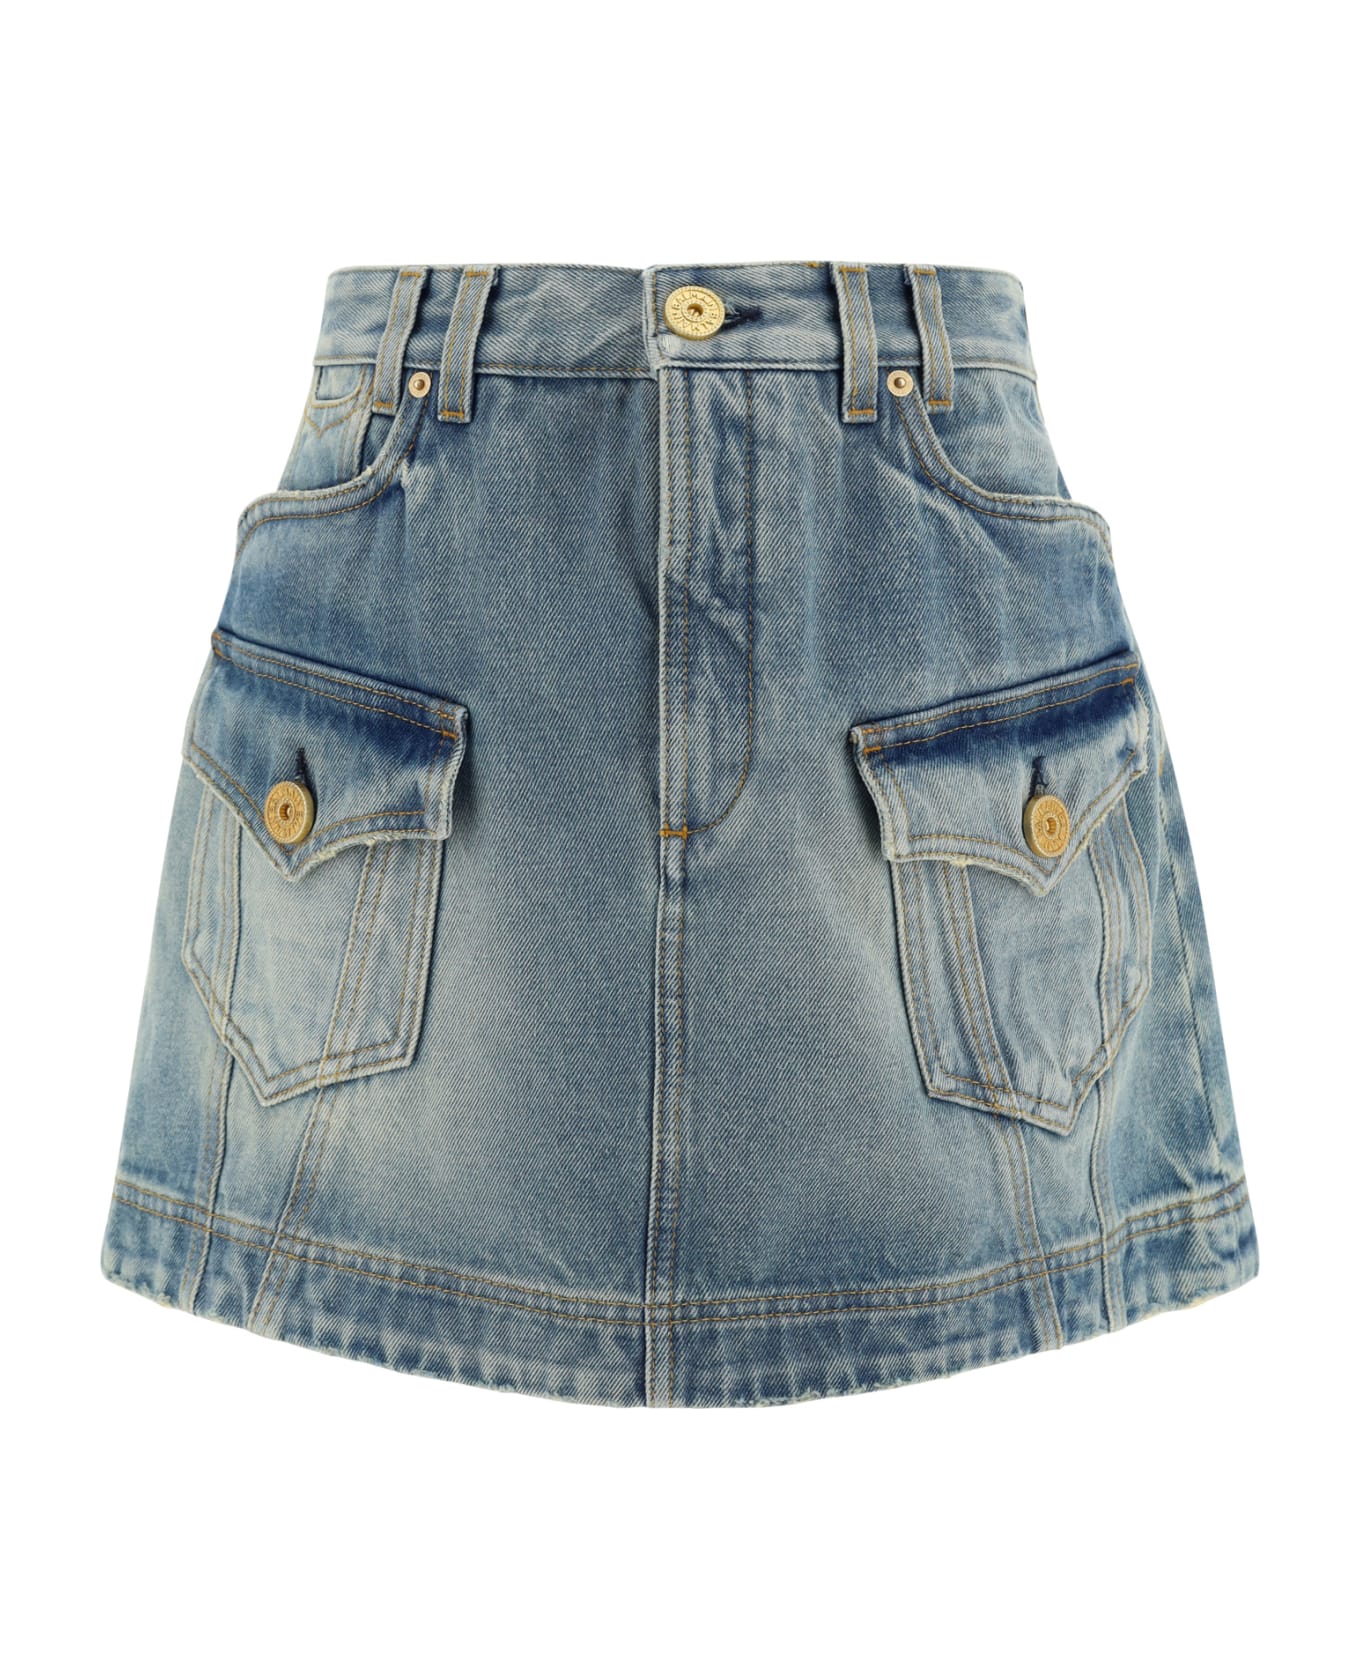 Balmain Western Skirt In Denim - 6ff Bleu Jean スカート